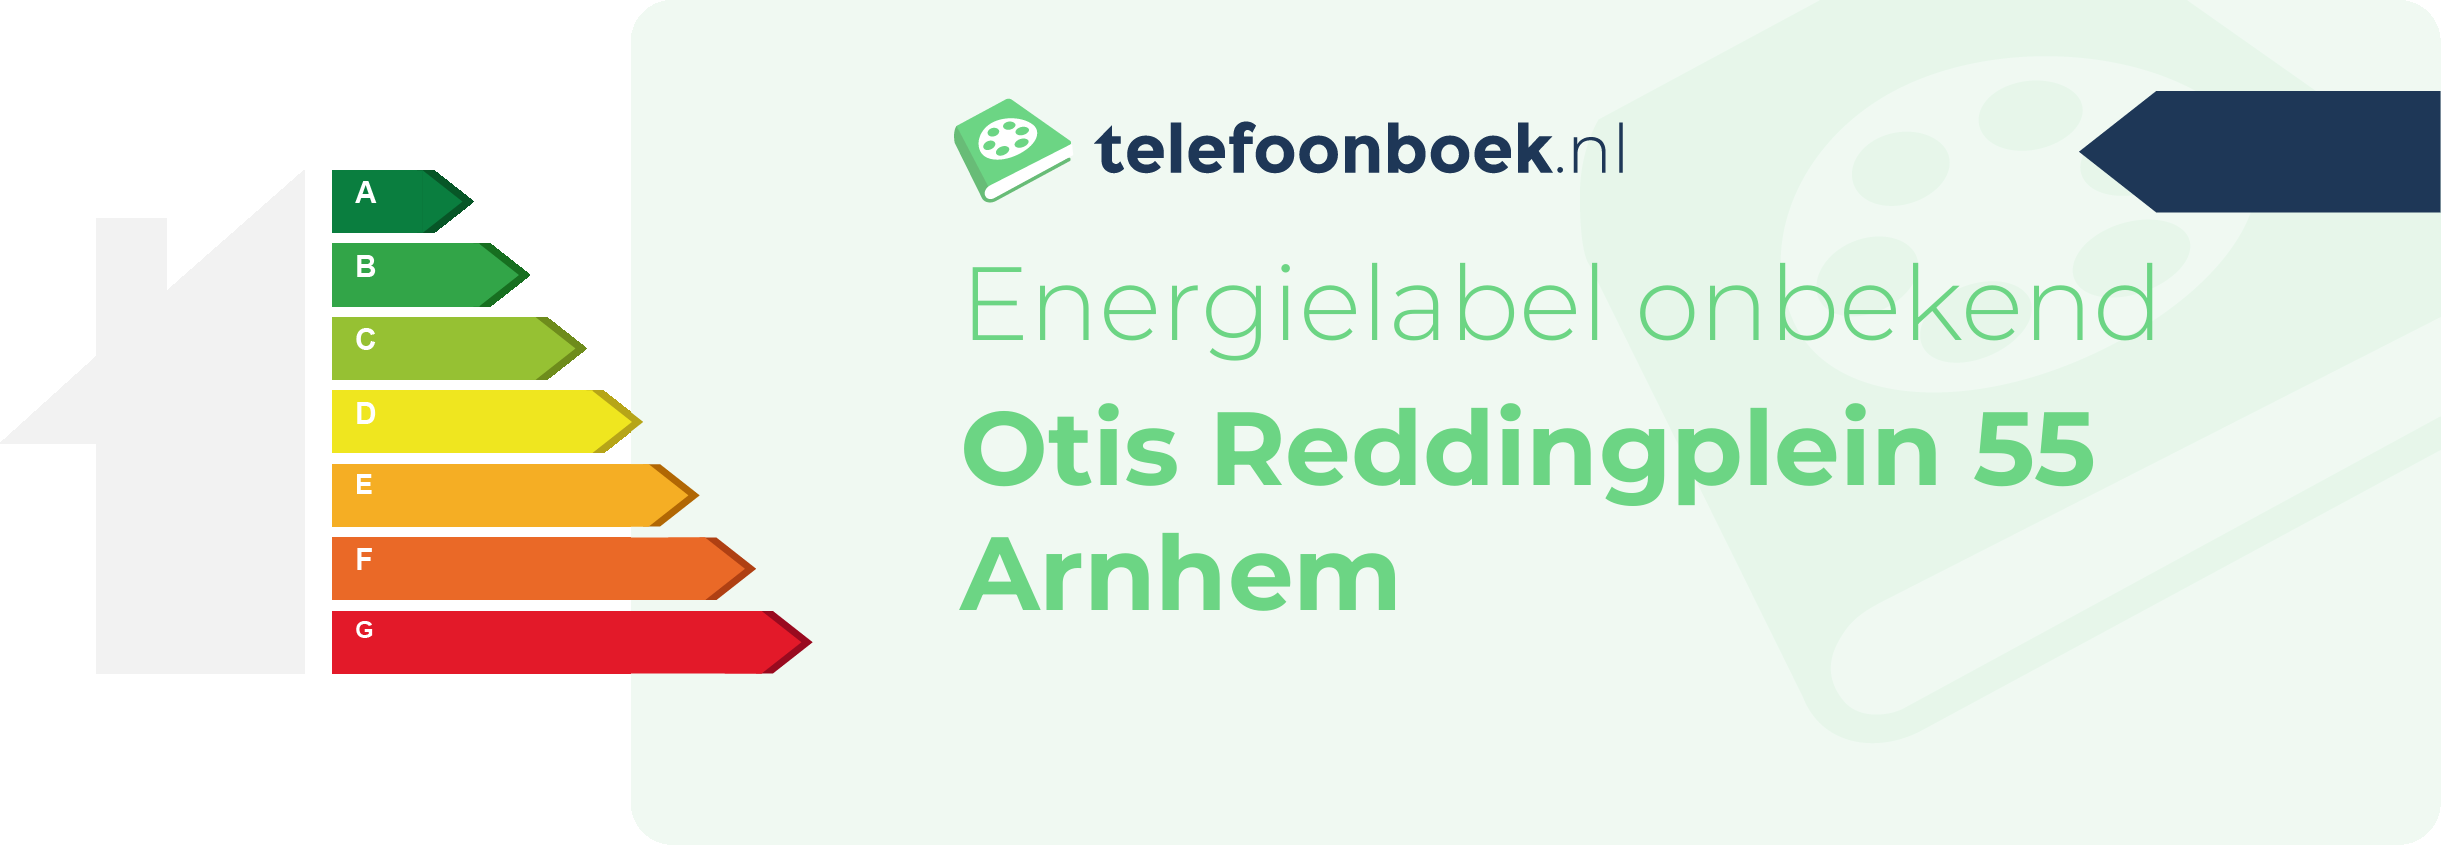 Energielabel Otis Reddingplein 55 Arnhem